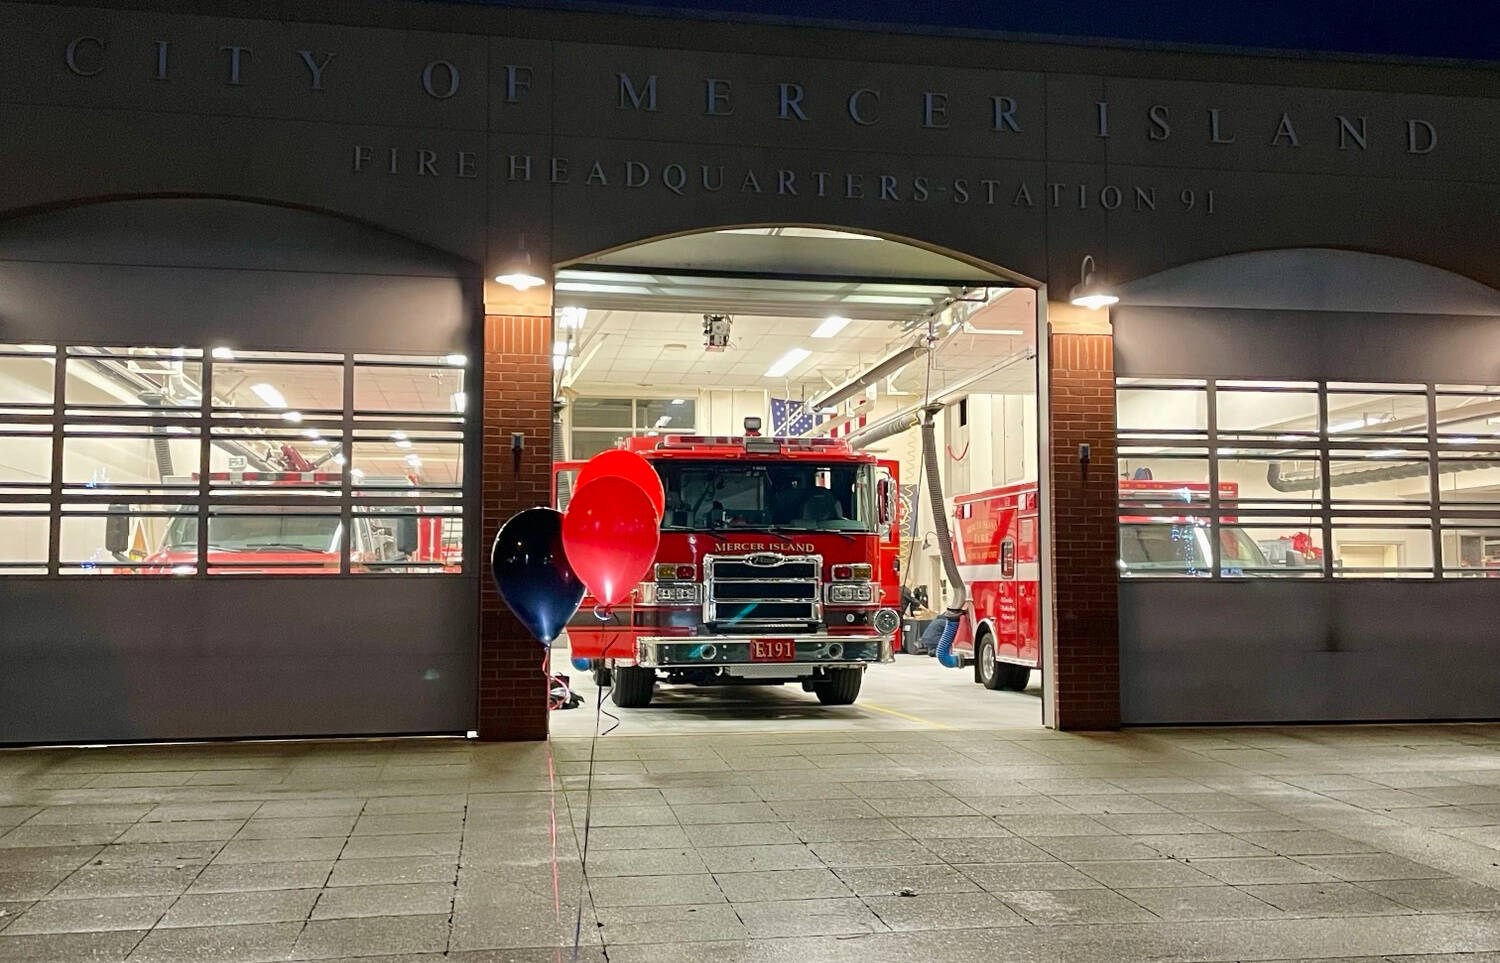 Eastside Fire & Rescue’s Mercer Island Fire Station 91. Photo courtesy of the city of Mercer Island